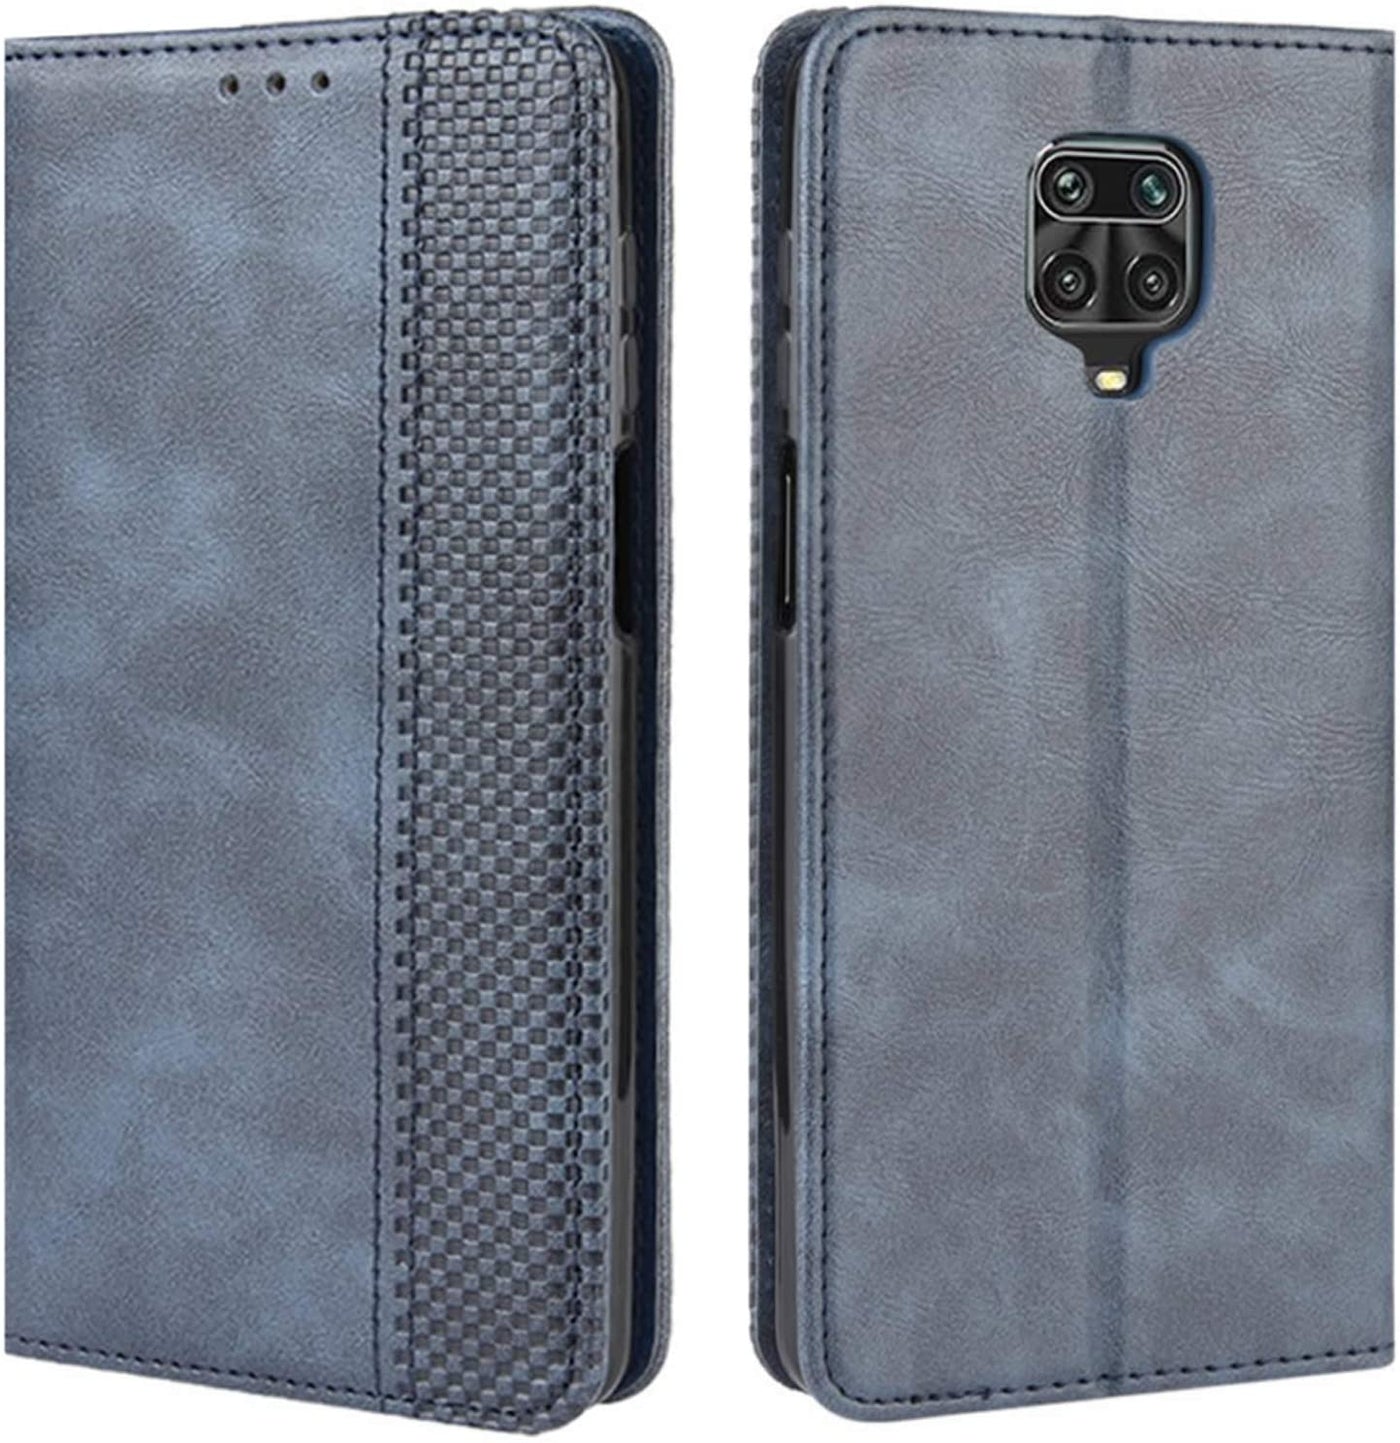 Xiaomi mi Redmi note 9 pro max blue color leather wallet flip cover case By excelsior